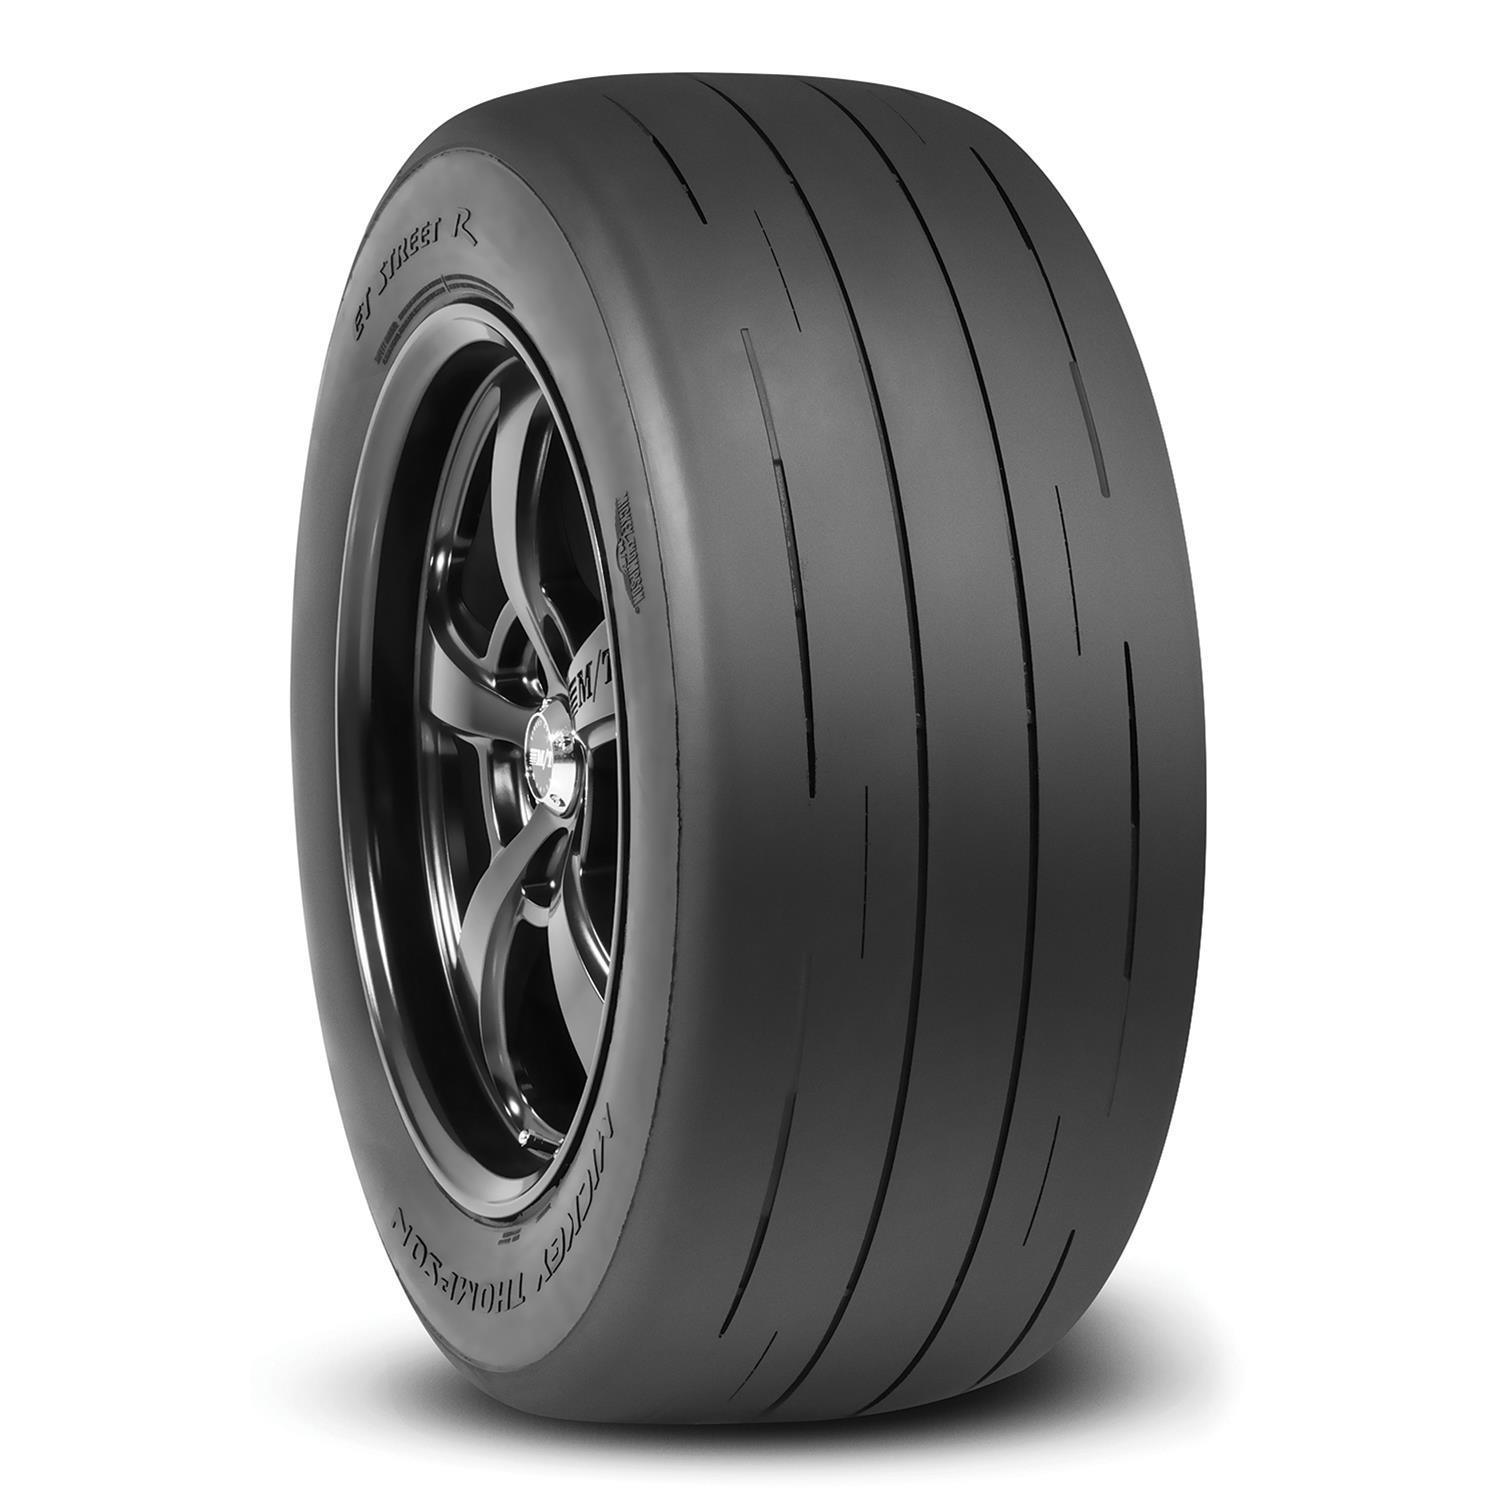 P305/45R17 ET Street R Tire - Burlile Performance Products